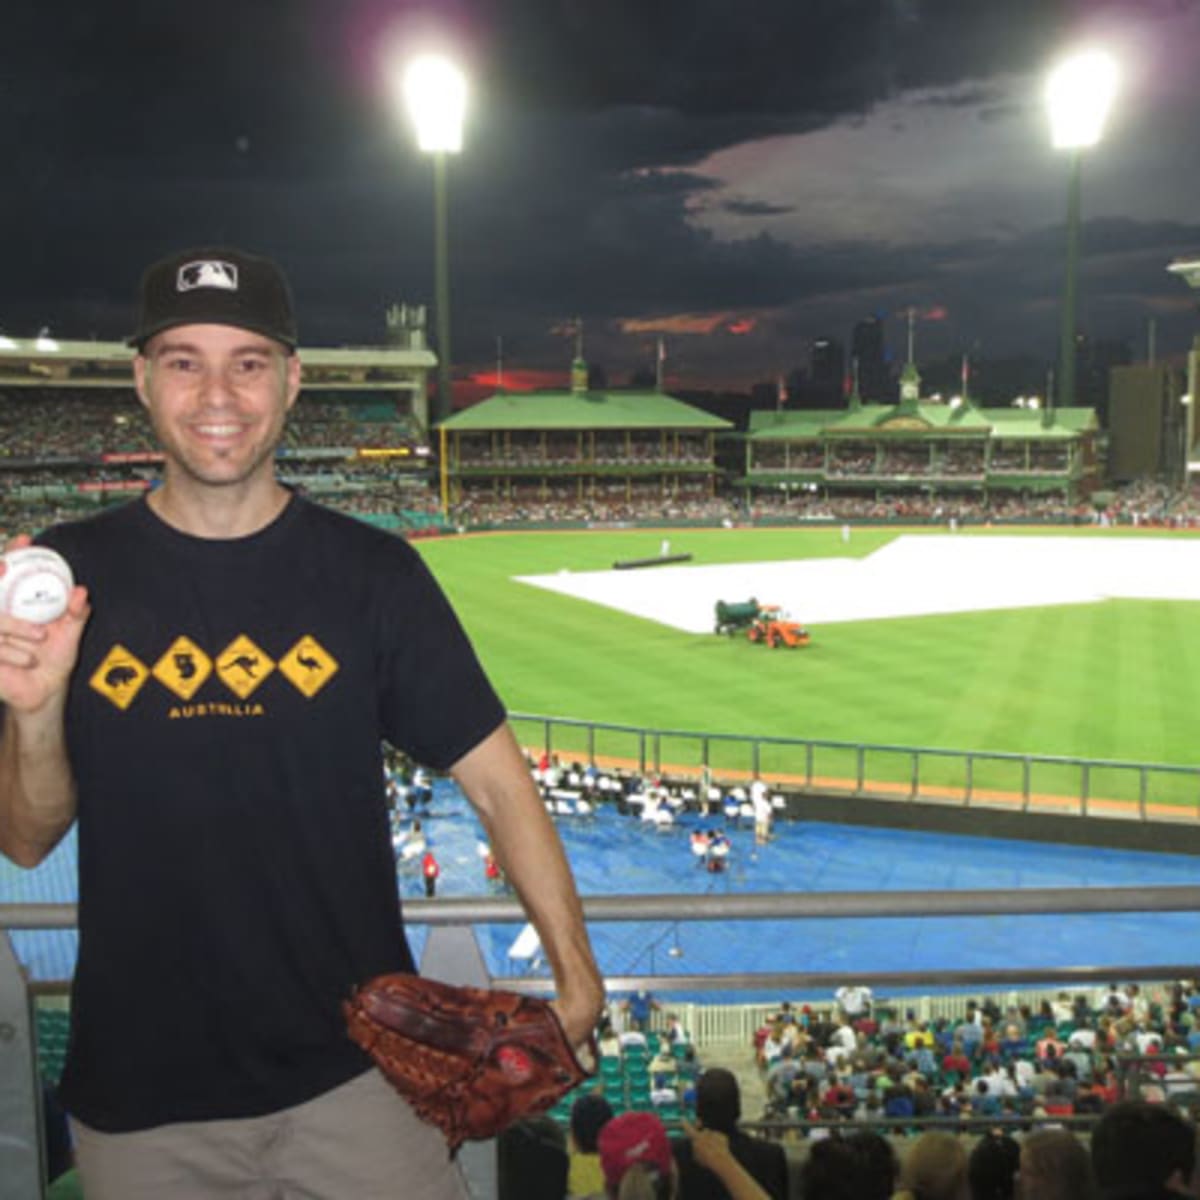 Valuable baseballs — Zack Hample